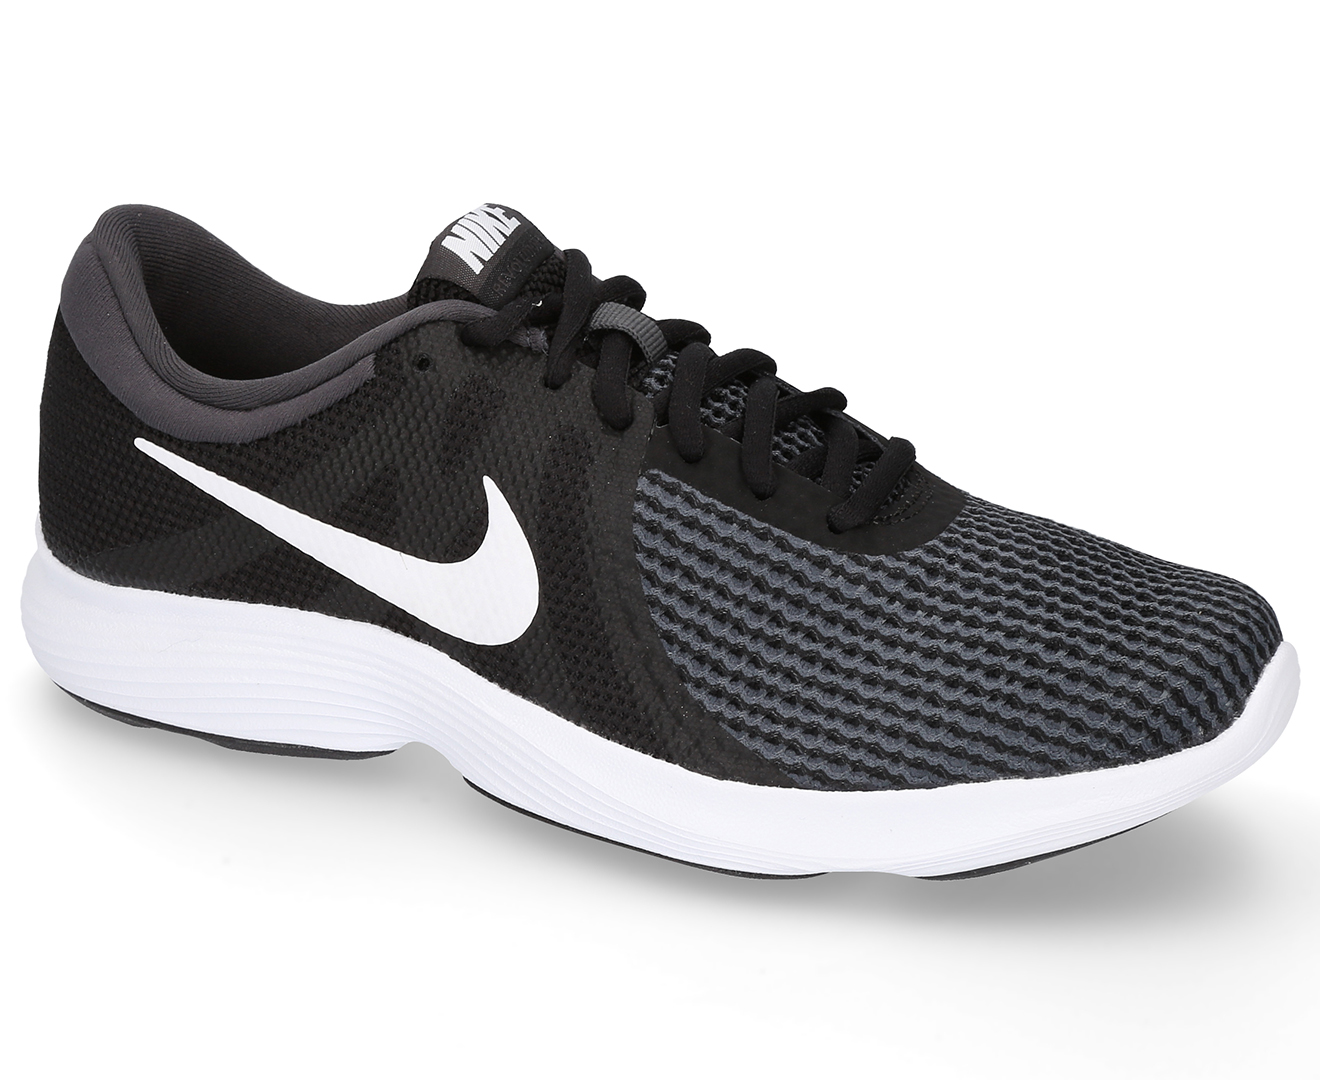 Nike Women's Revolution 4 Shoe - Black/White-Anthracite | Scoopon Shopping